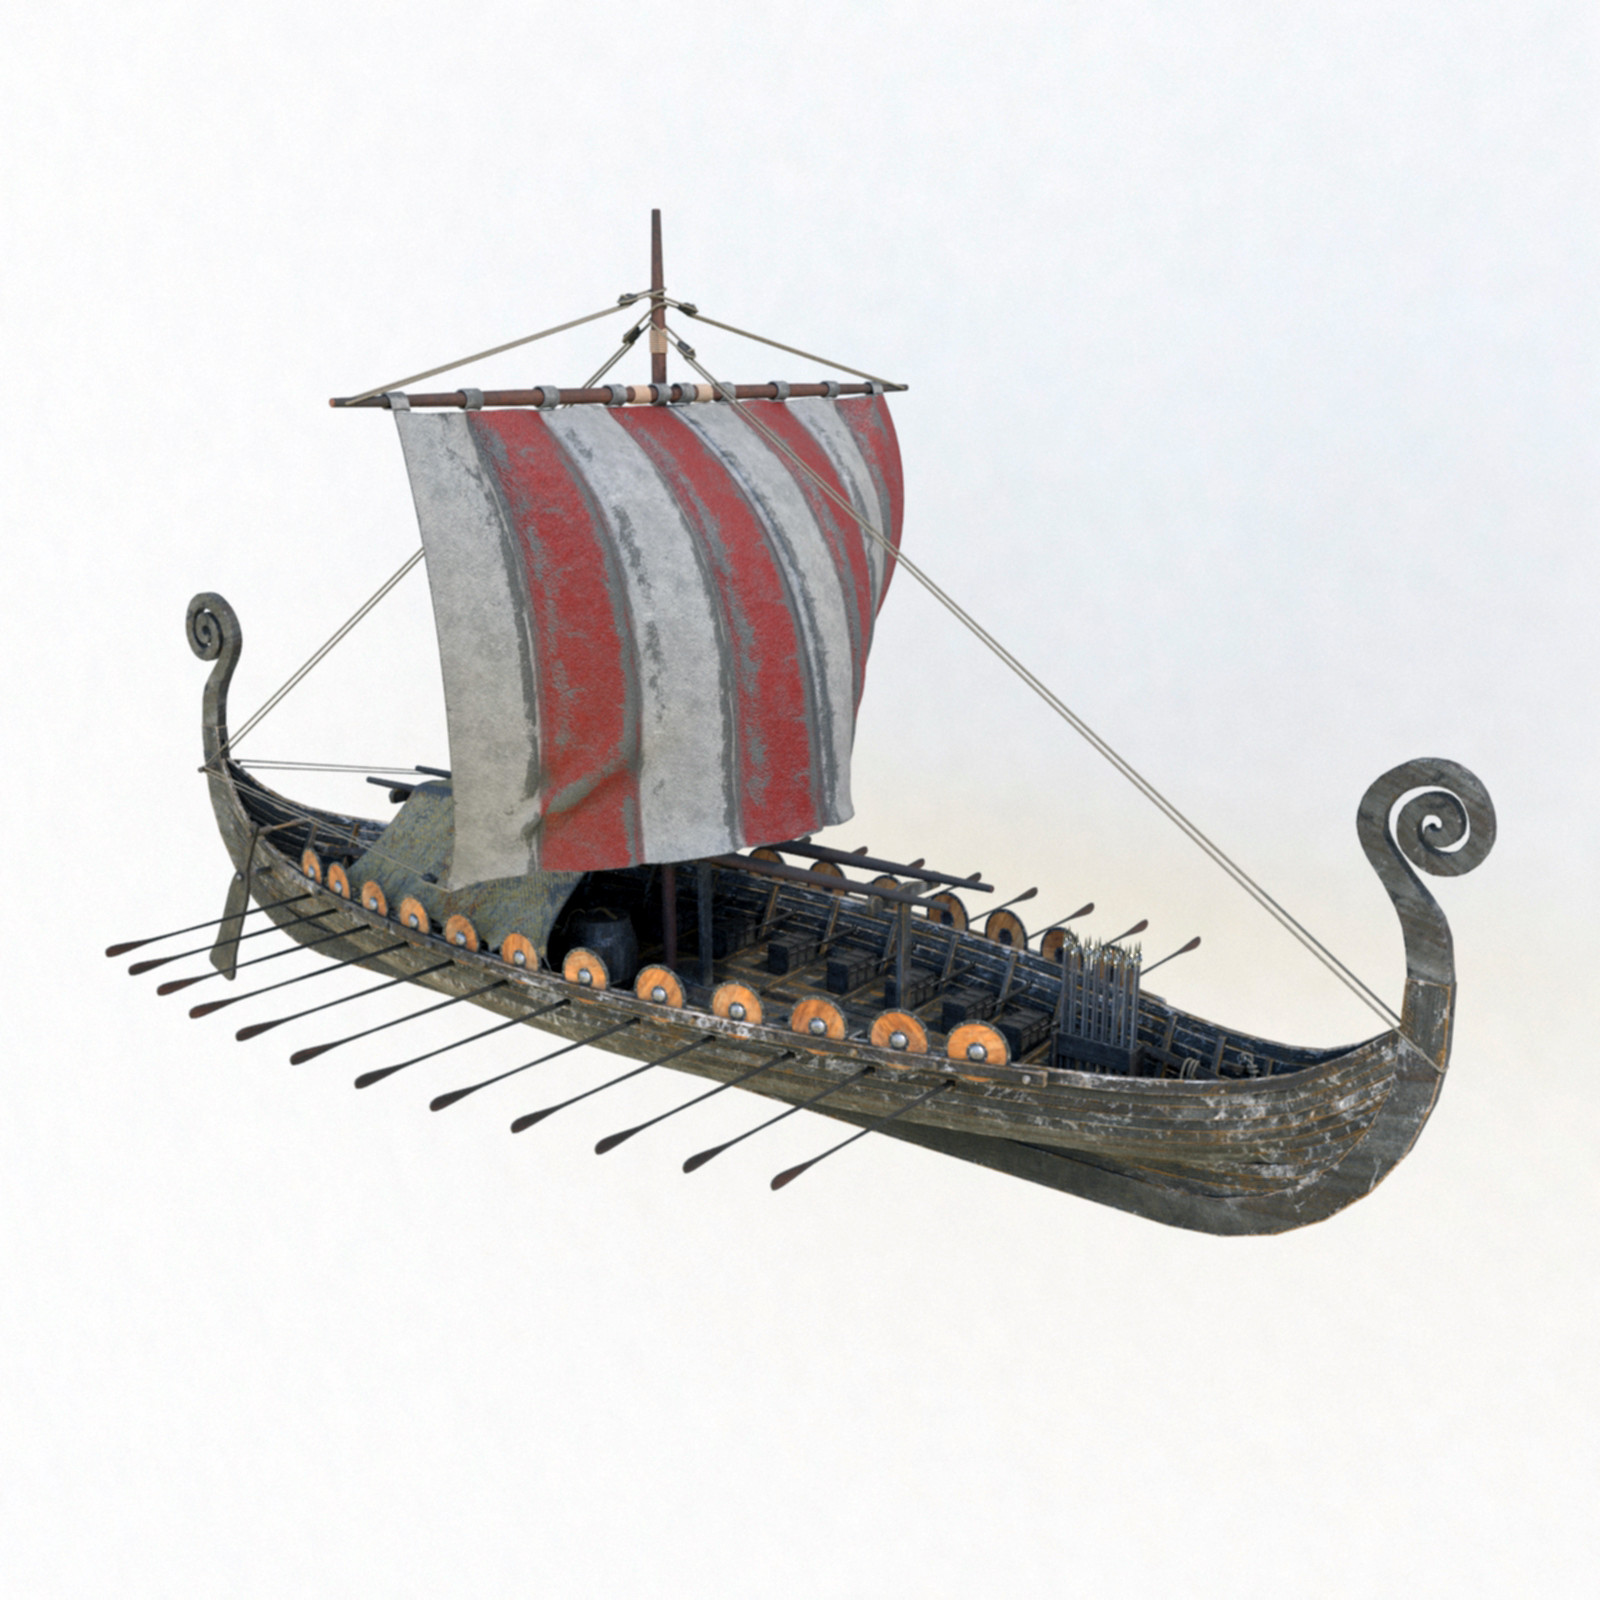 Название ладьи. Дракар корабль викингов. Норманнский Драккар. Ладья Драккар викингов. Дракар викингов модель.